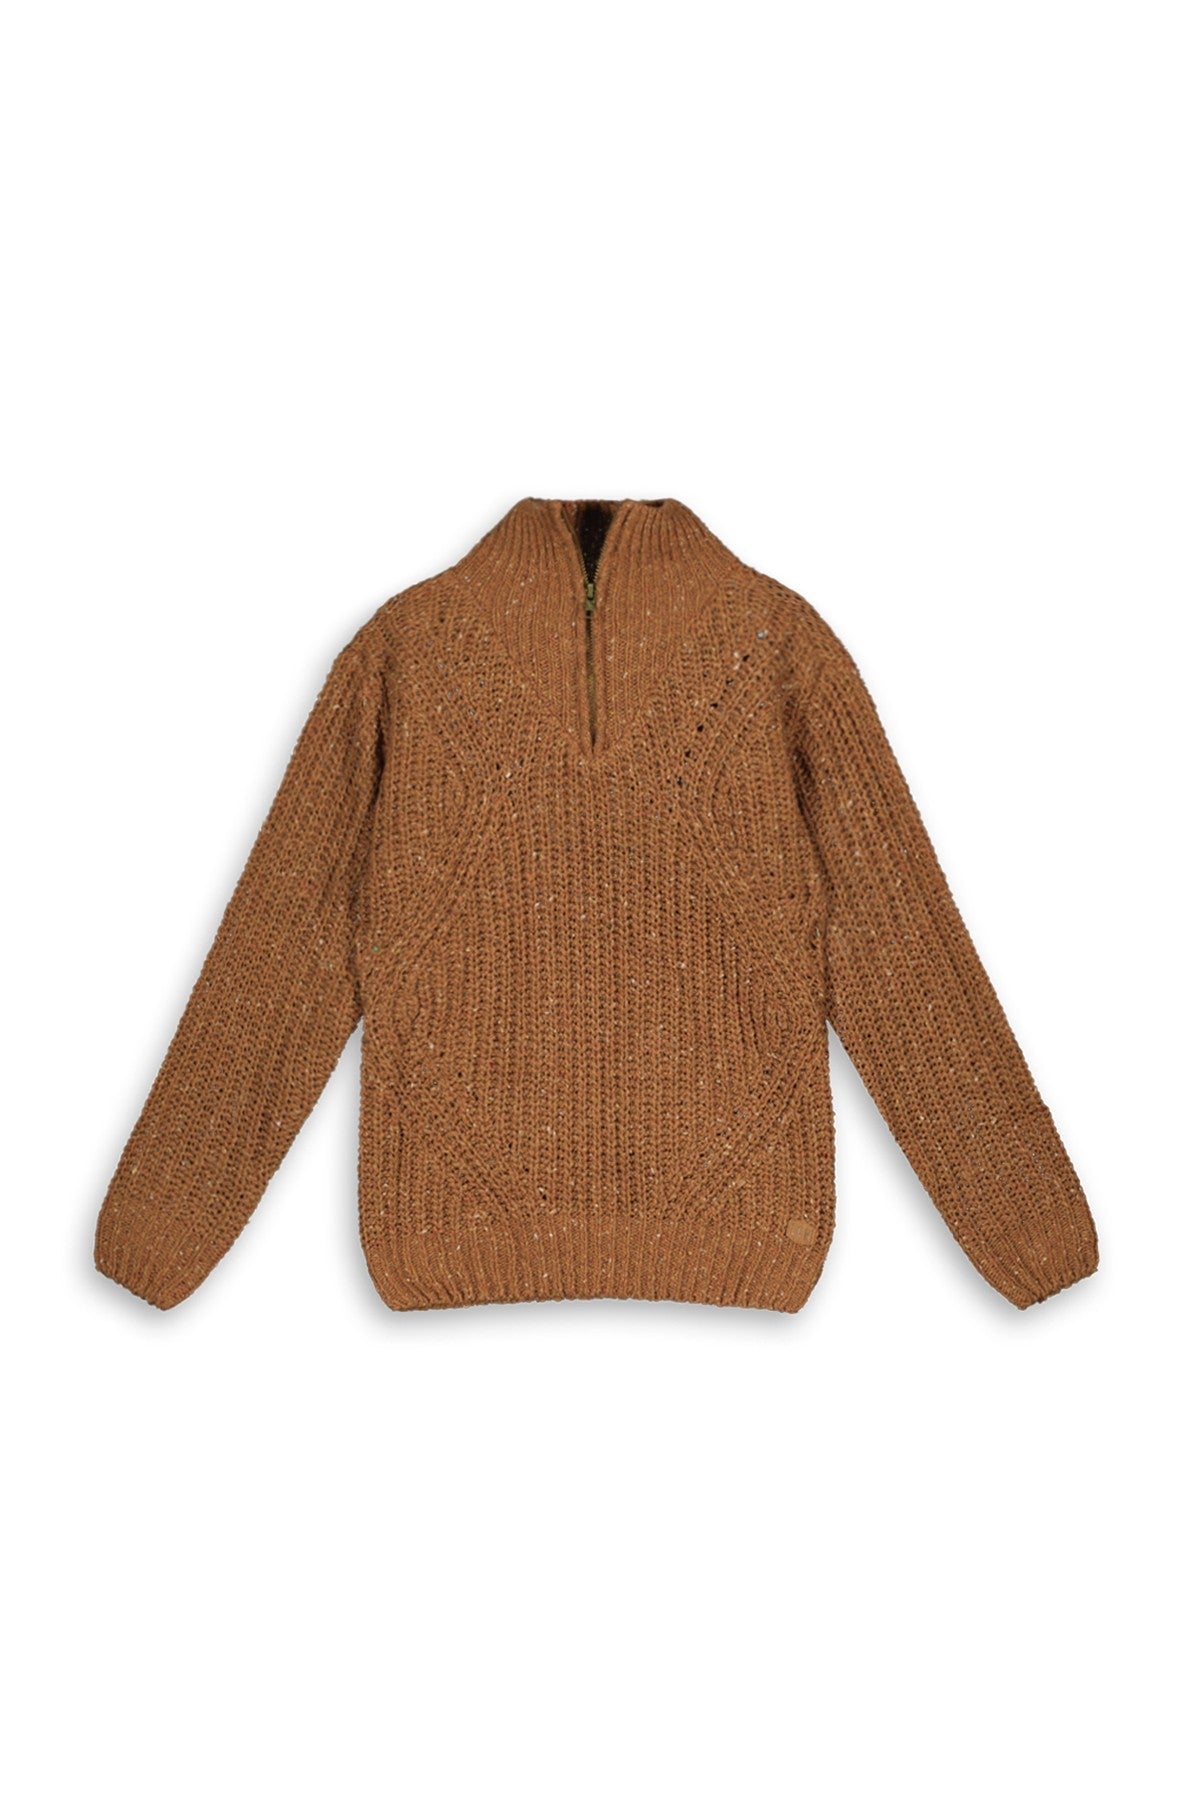 Jongens Knitted Sweater Ready On van Charlie Ray in de kleur Caramel in maat 164.